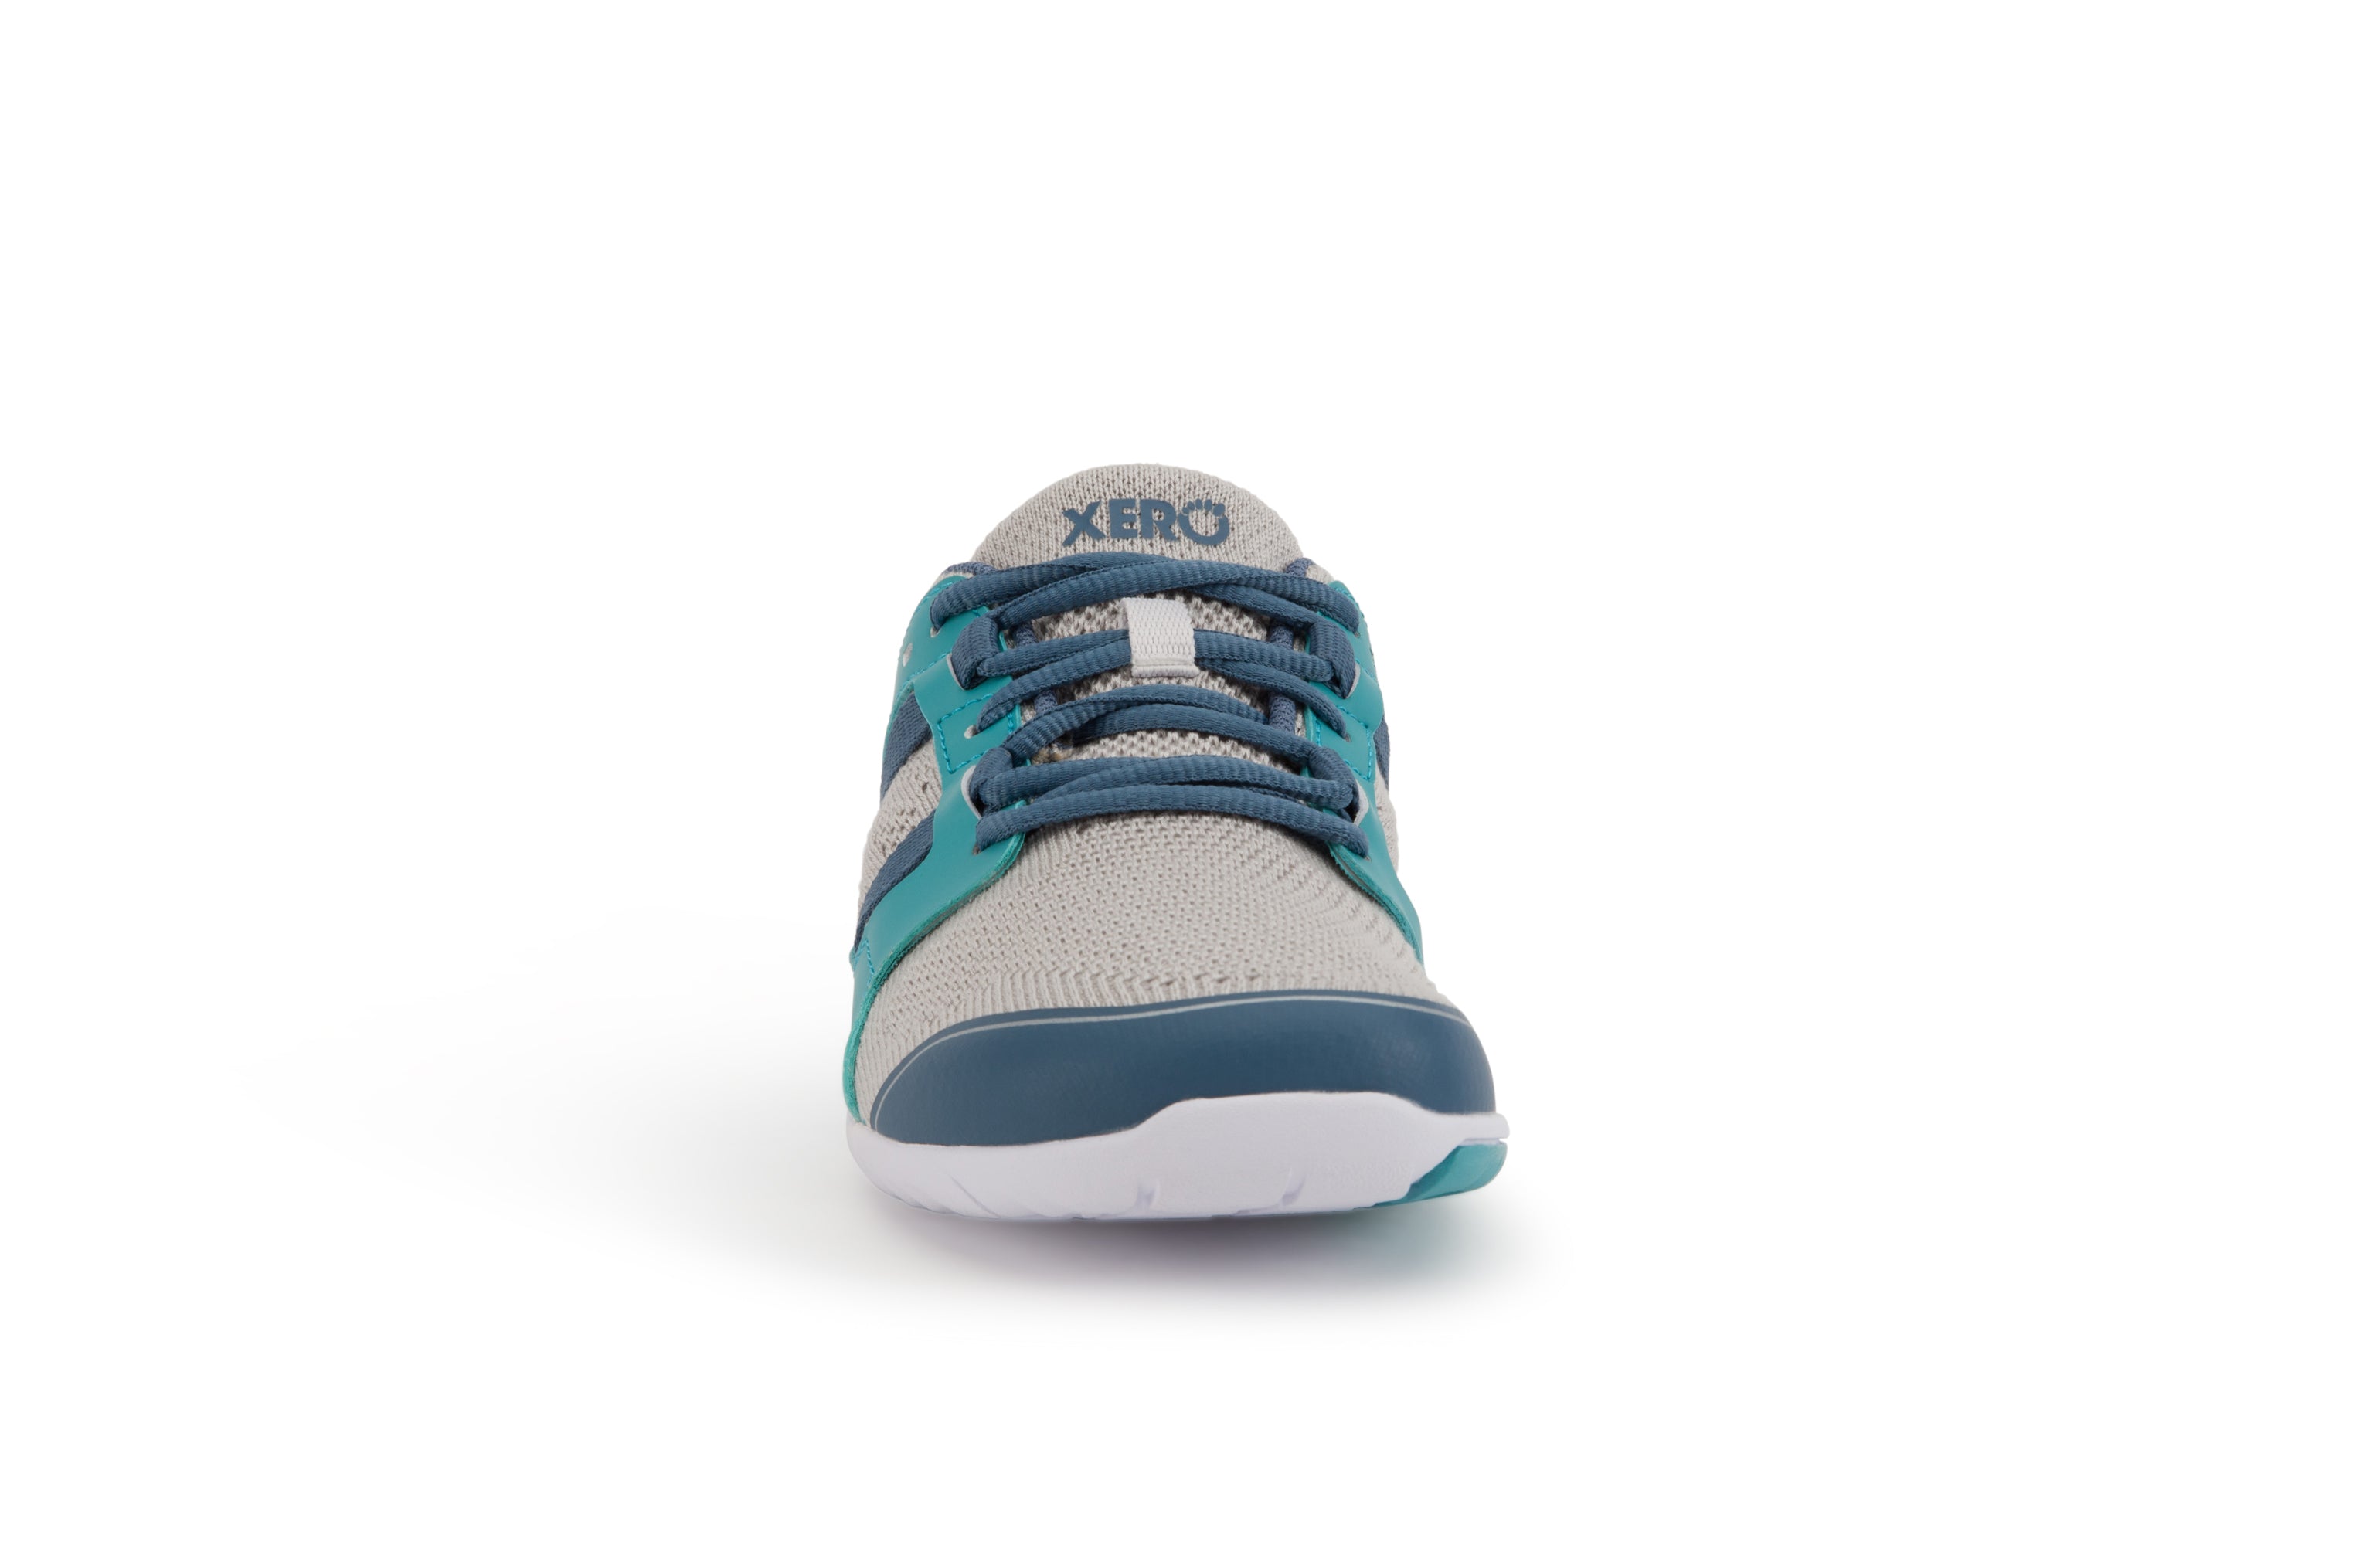 Xero Shoes Zelen Womens barfods træningssko til kvinder i farven cloud / porcelain blue, forfra